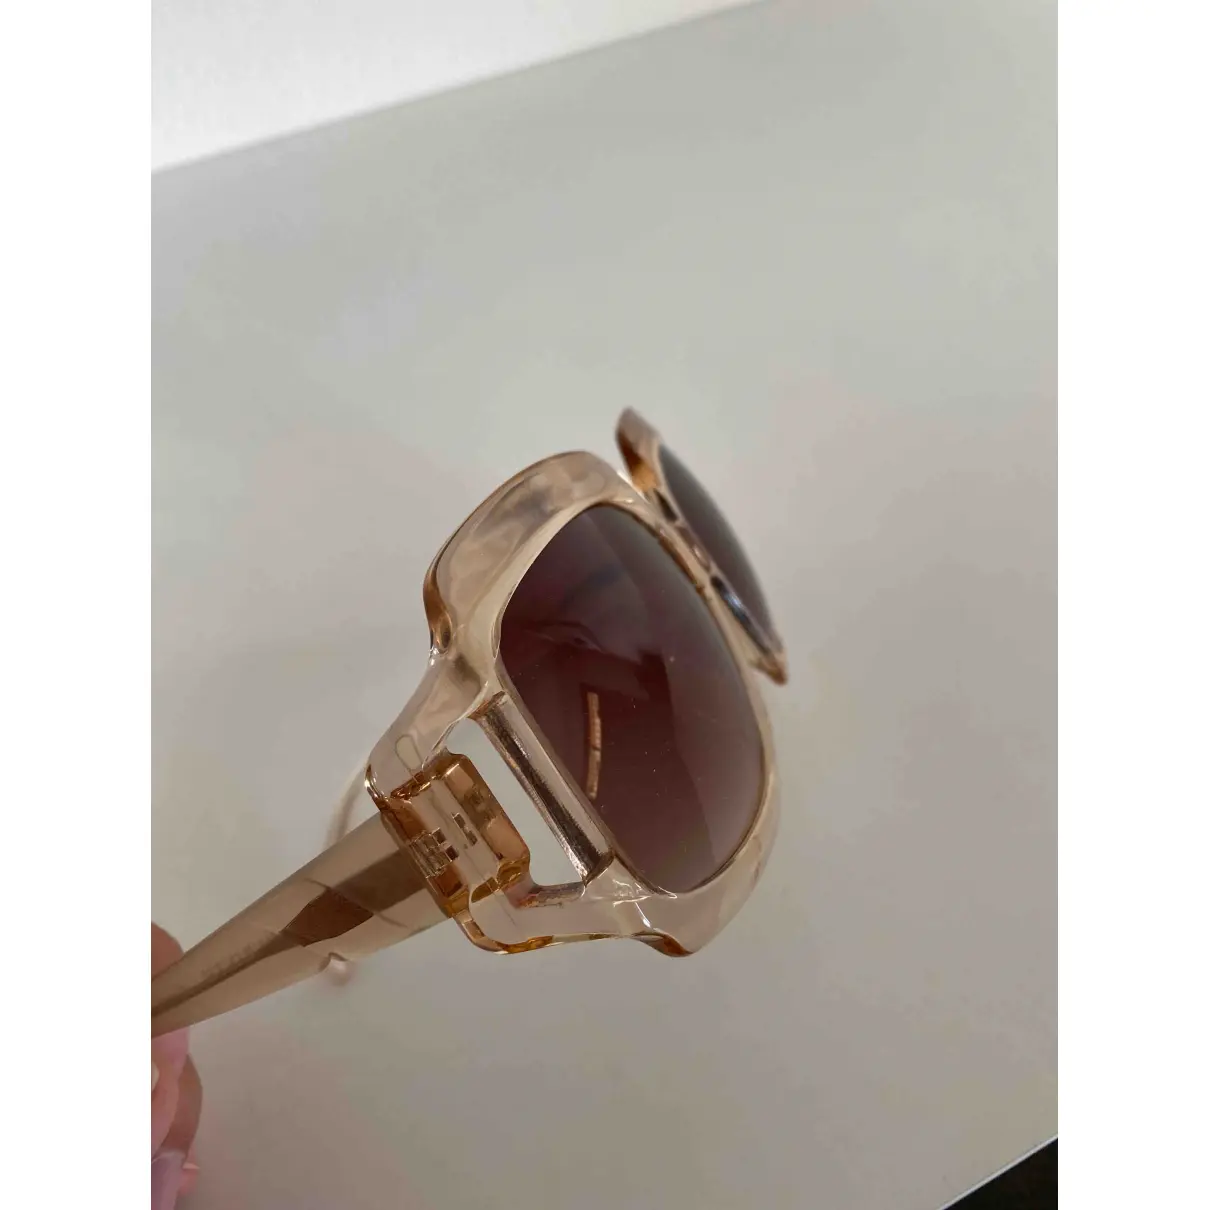 Luxury Loree Rodkin by Sama Sunglasses Women